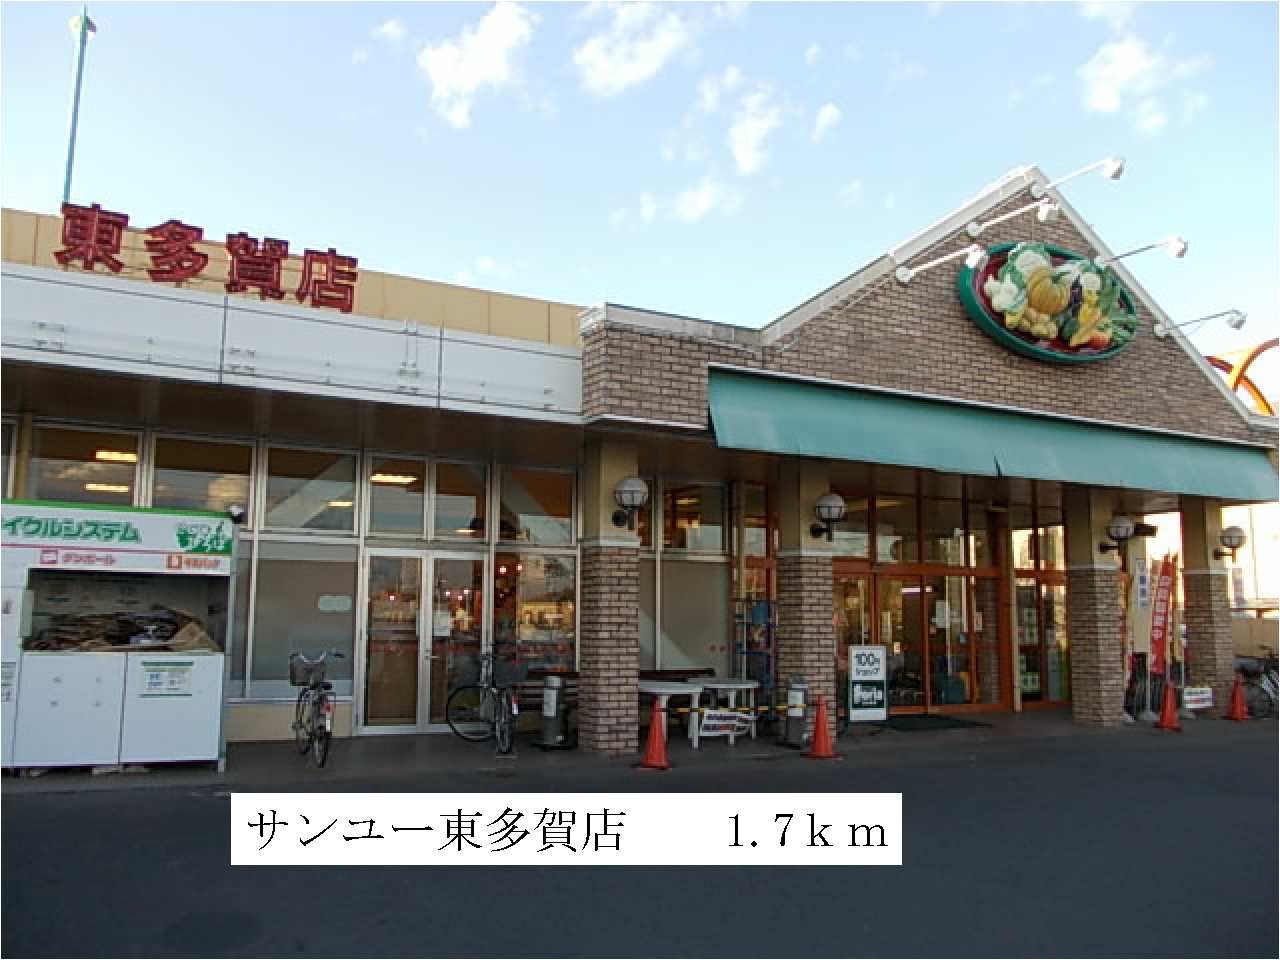 Supermarket. Sanyu Higashitaga store up to (super) 1700m